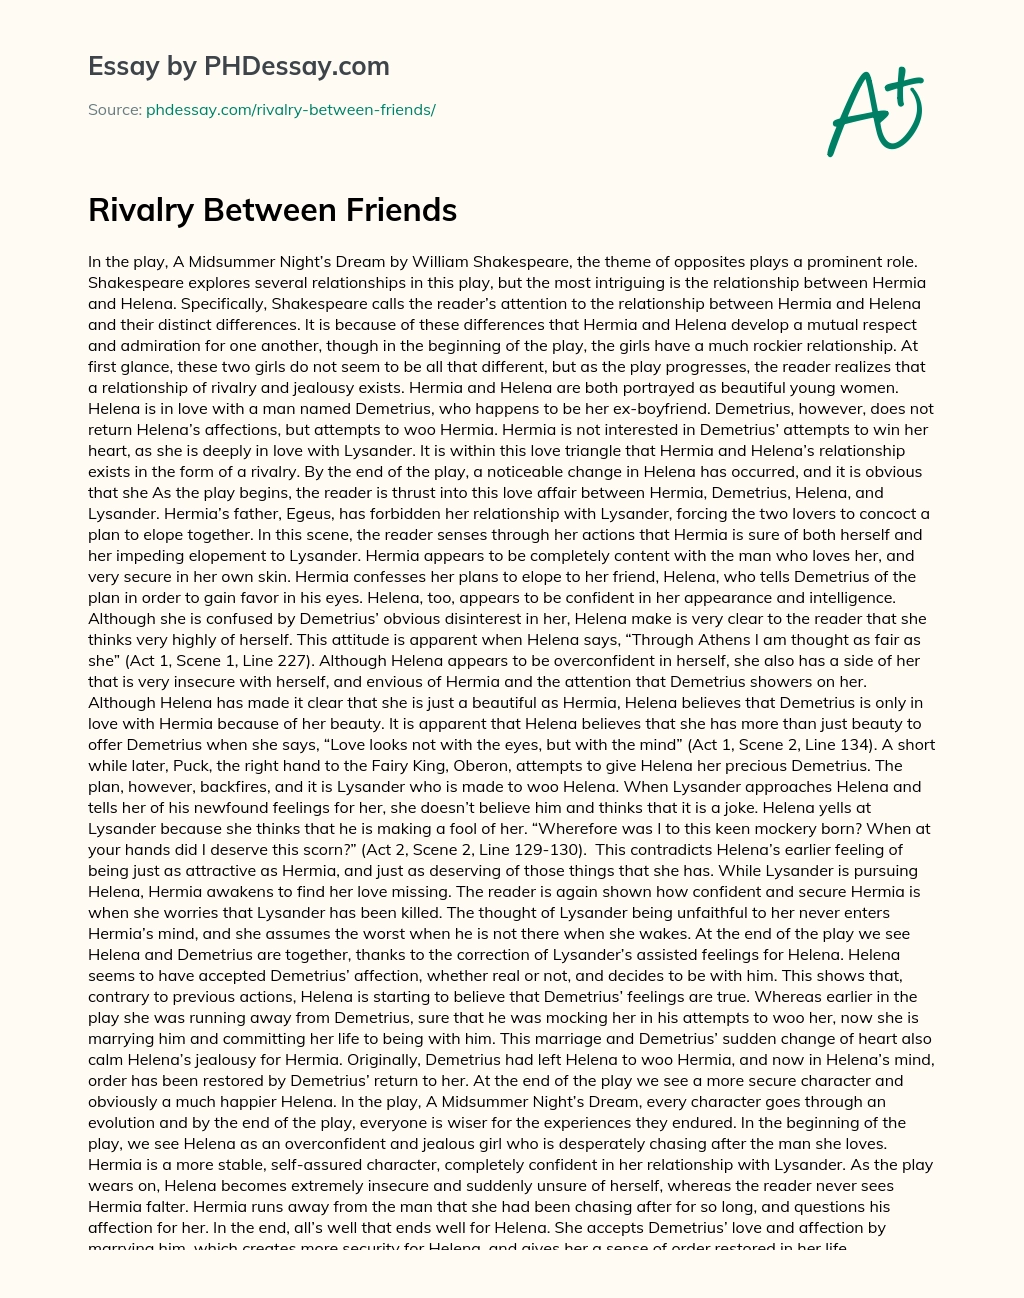 gene and finny friendship essay